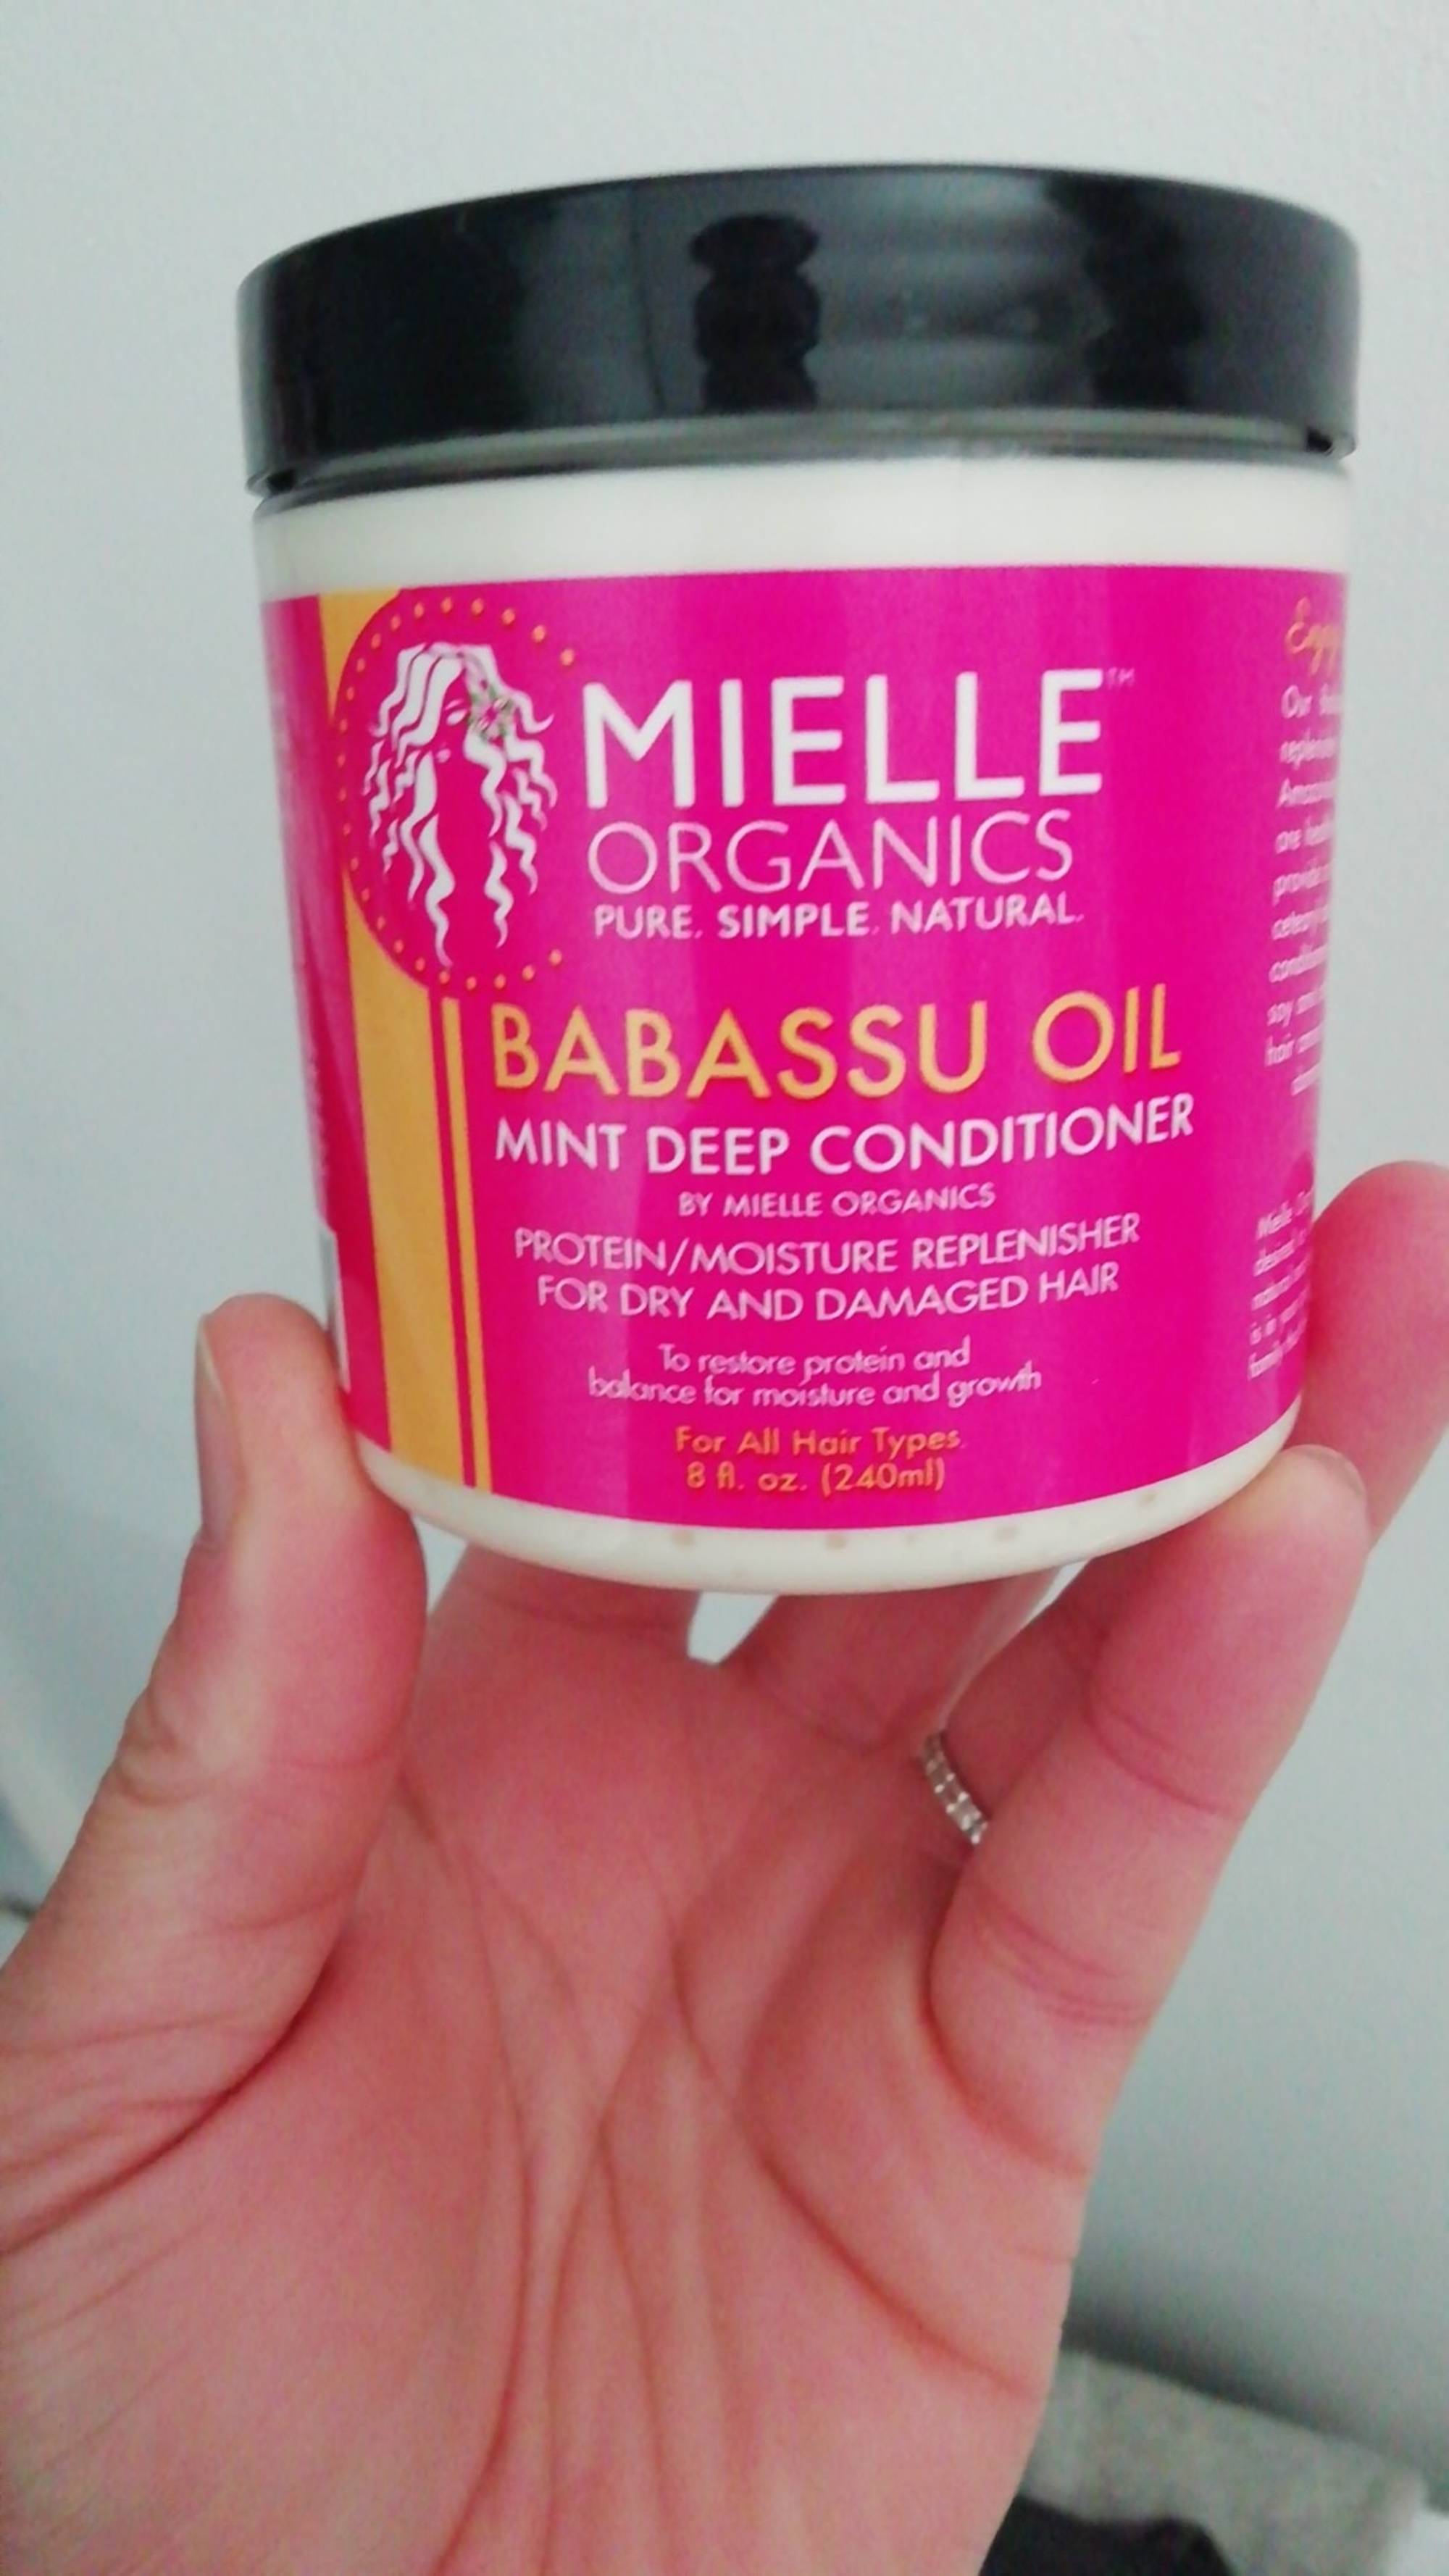 MIELLE ORGANICS - Babassu oil mint deep conditioner